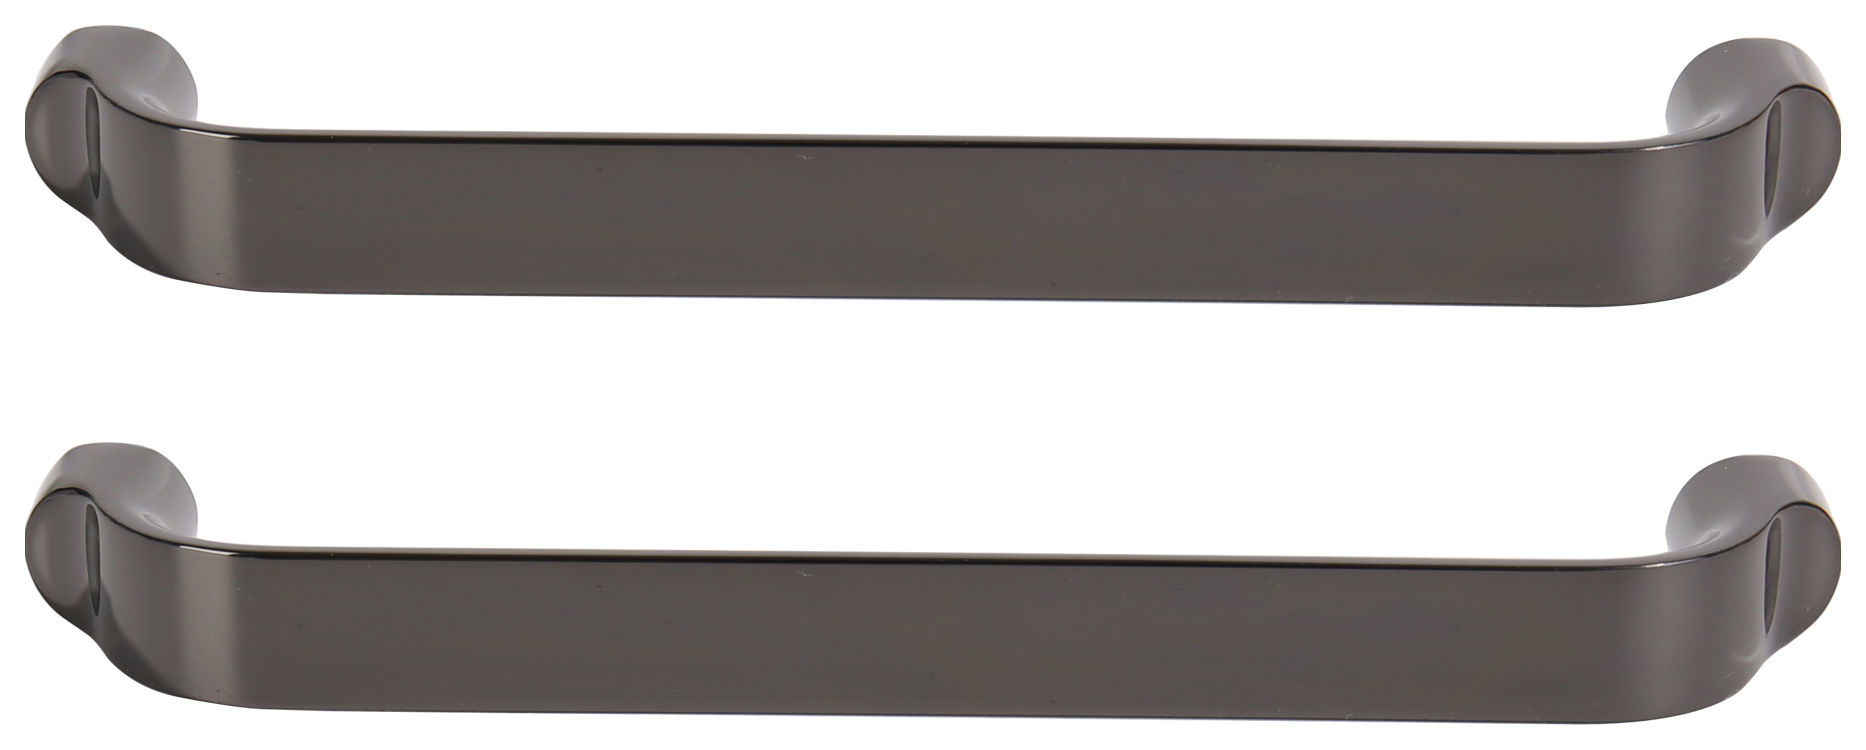 Straight Cabinet Handle Black Nickel 140mm - Pack